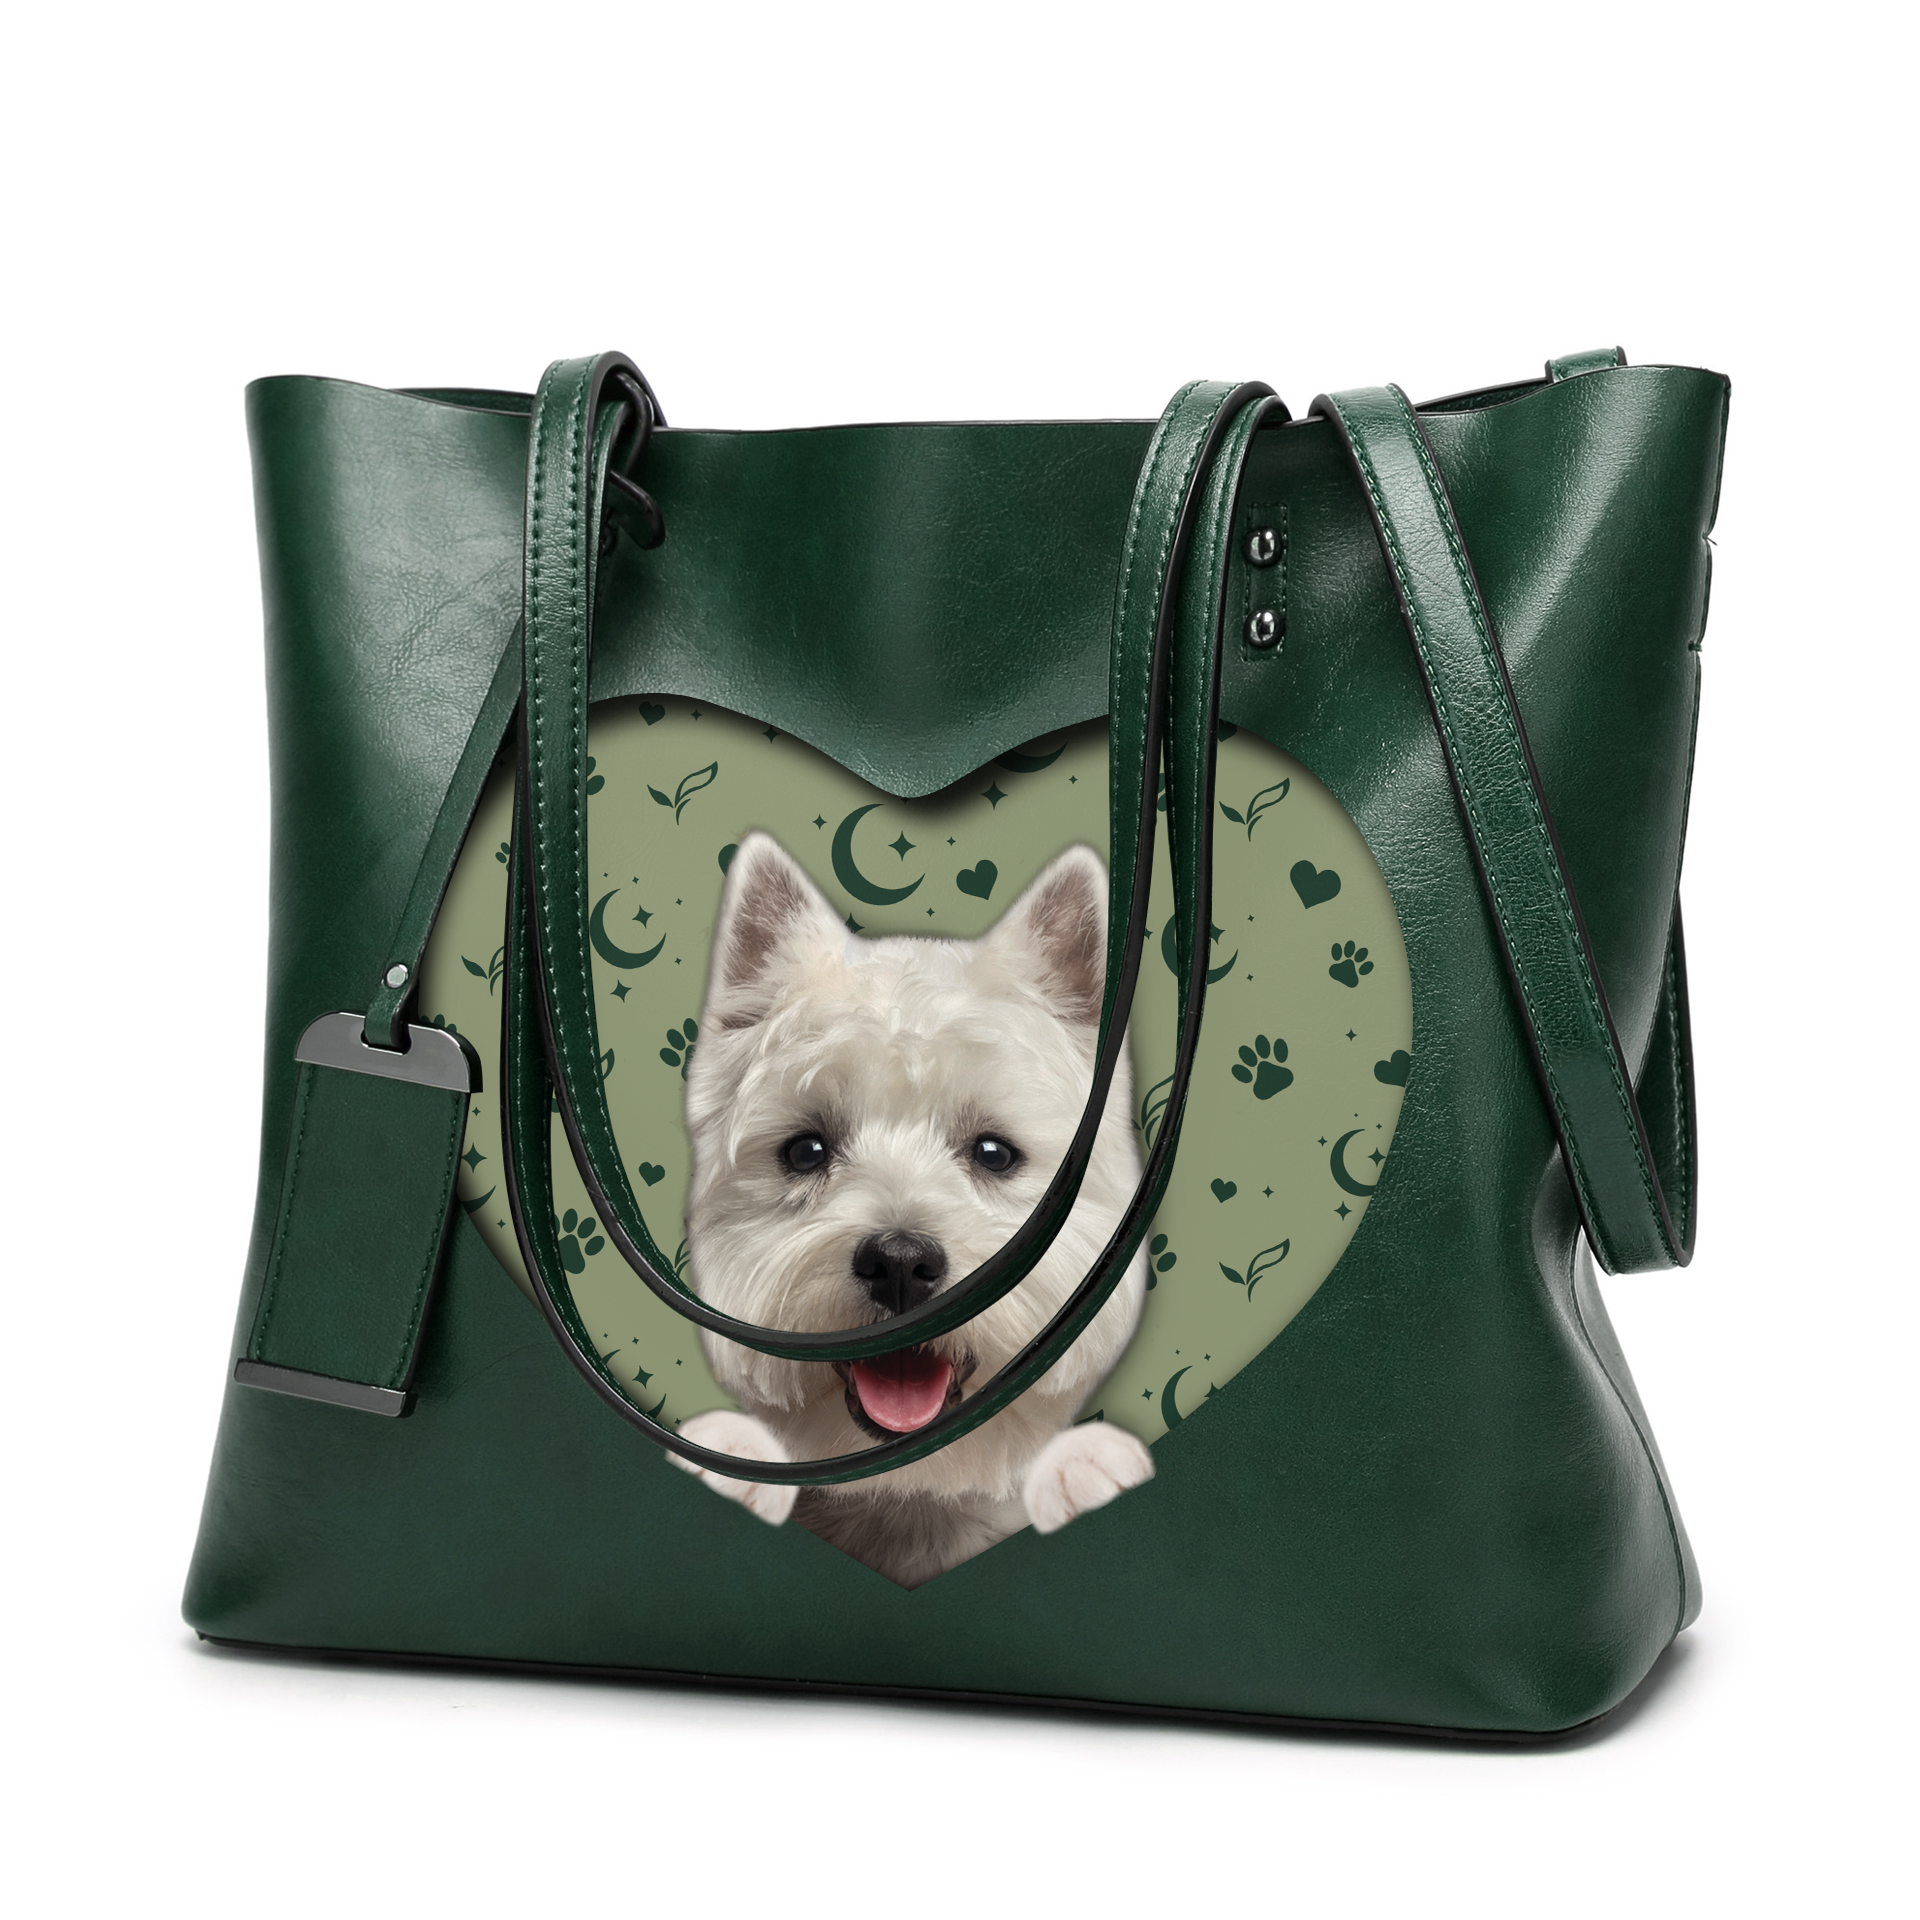 I Know I'm Cute - West Highland White Terrier Glamour Handbag V1 - 12